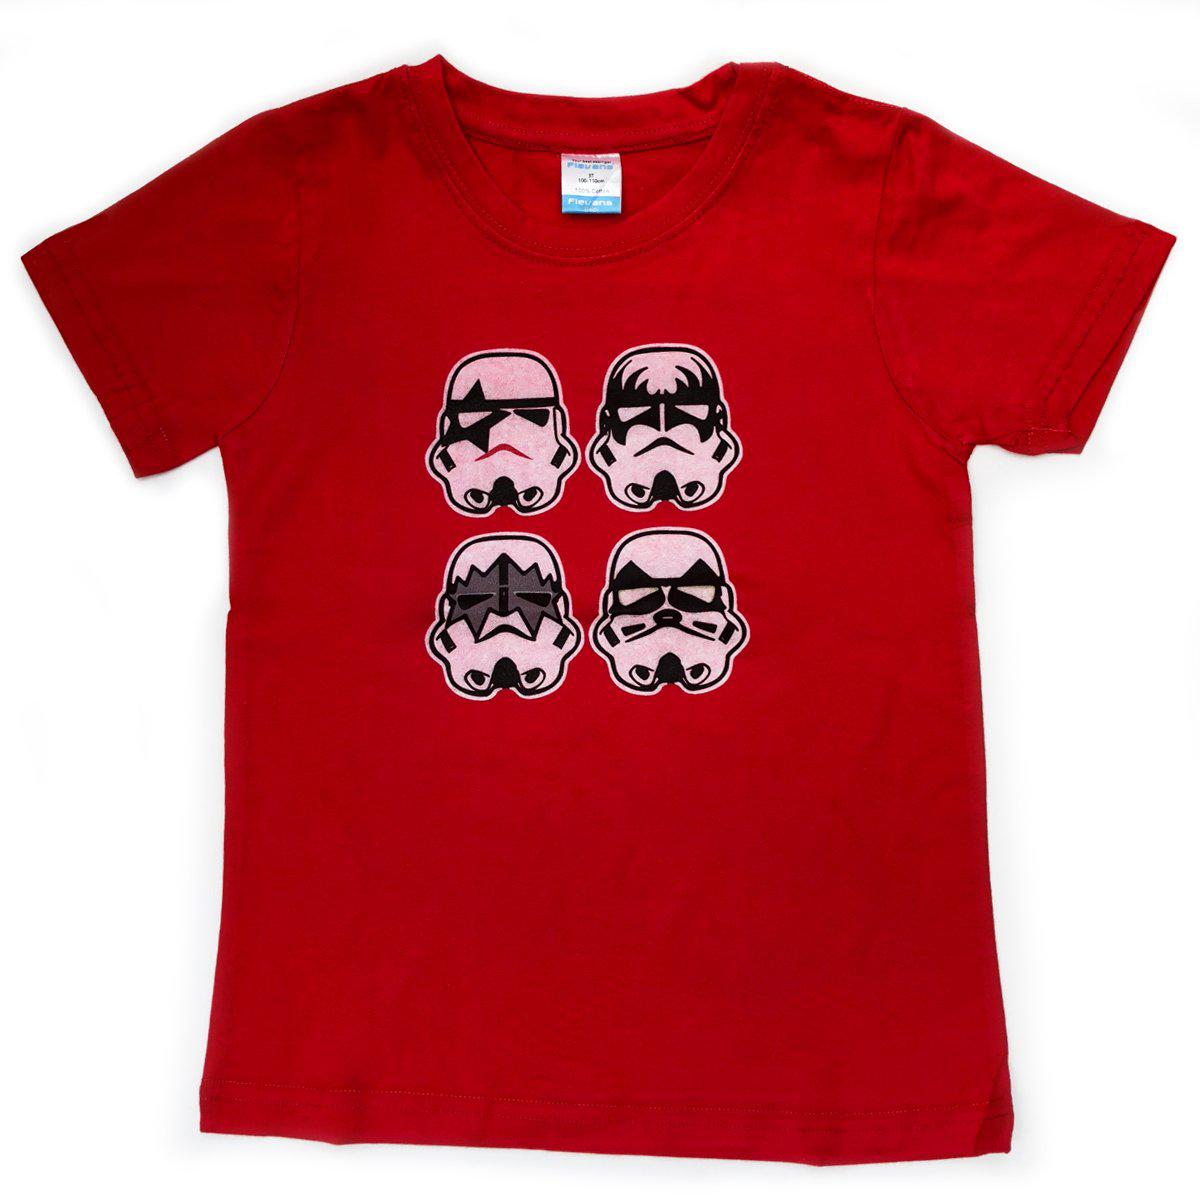 Kids Kiss Storm trooper t-shirt in red